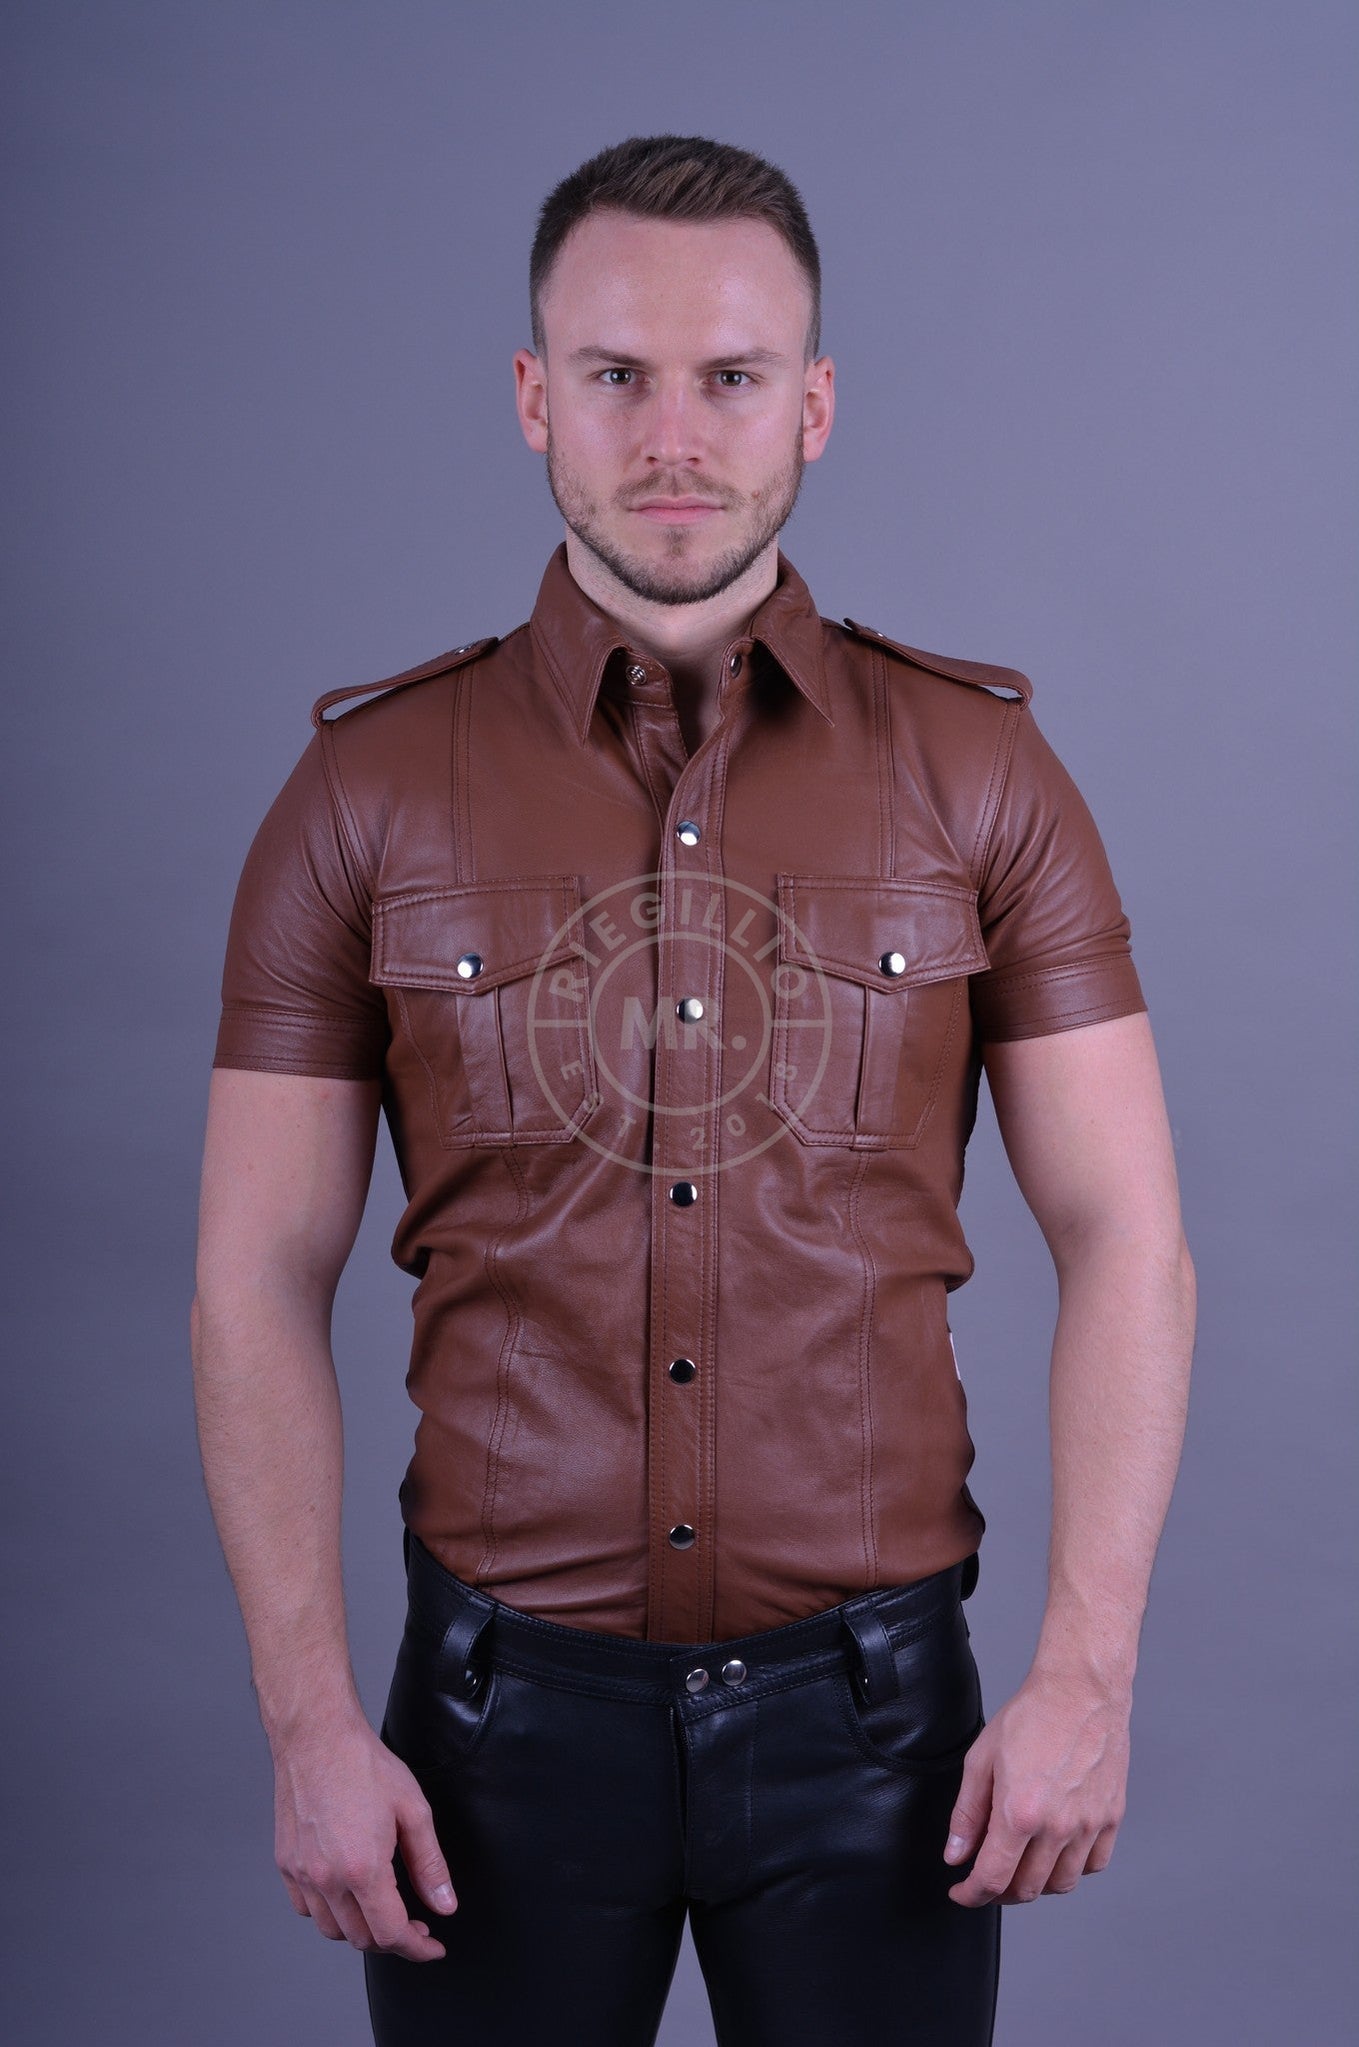 Cinnamon Brown Leather Shirt by MR. Riegillio